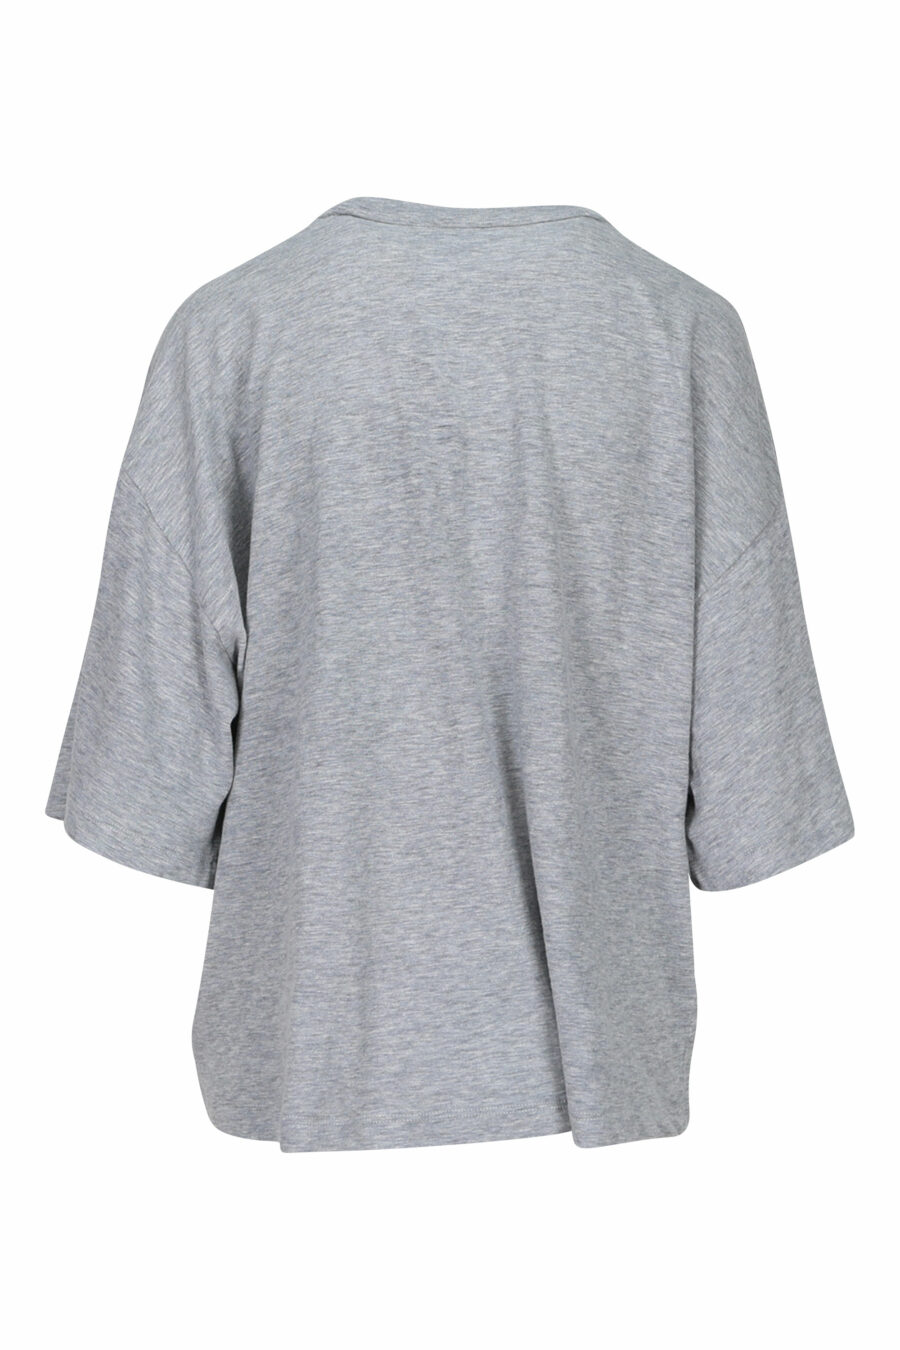 Camiseta gris oversize con maxilogo rosa - 8054148109882 1